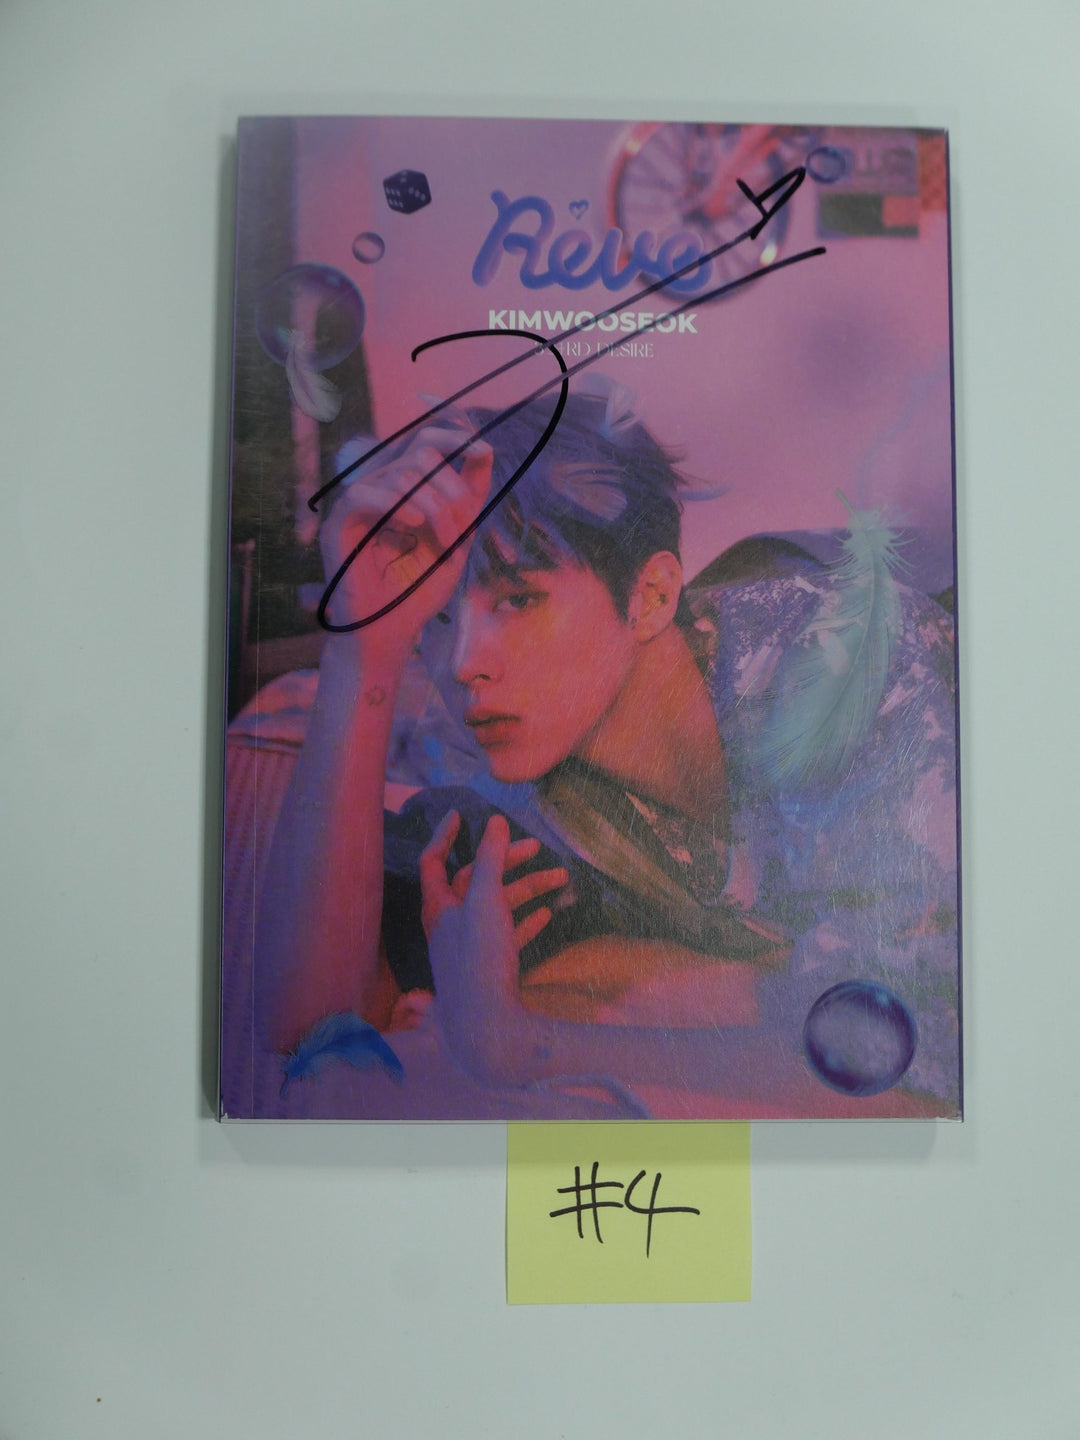 Kim WOO SEOK "REVE" - Hand Autographed(Signed) Promo Album